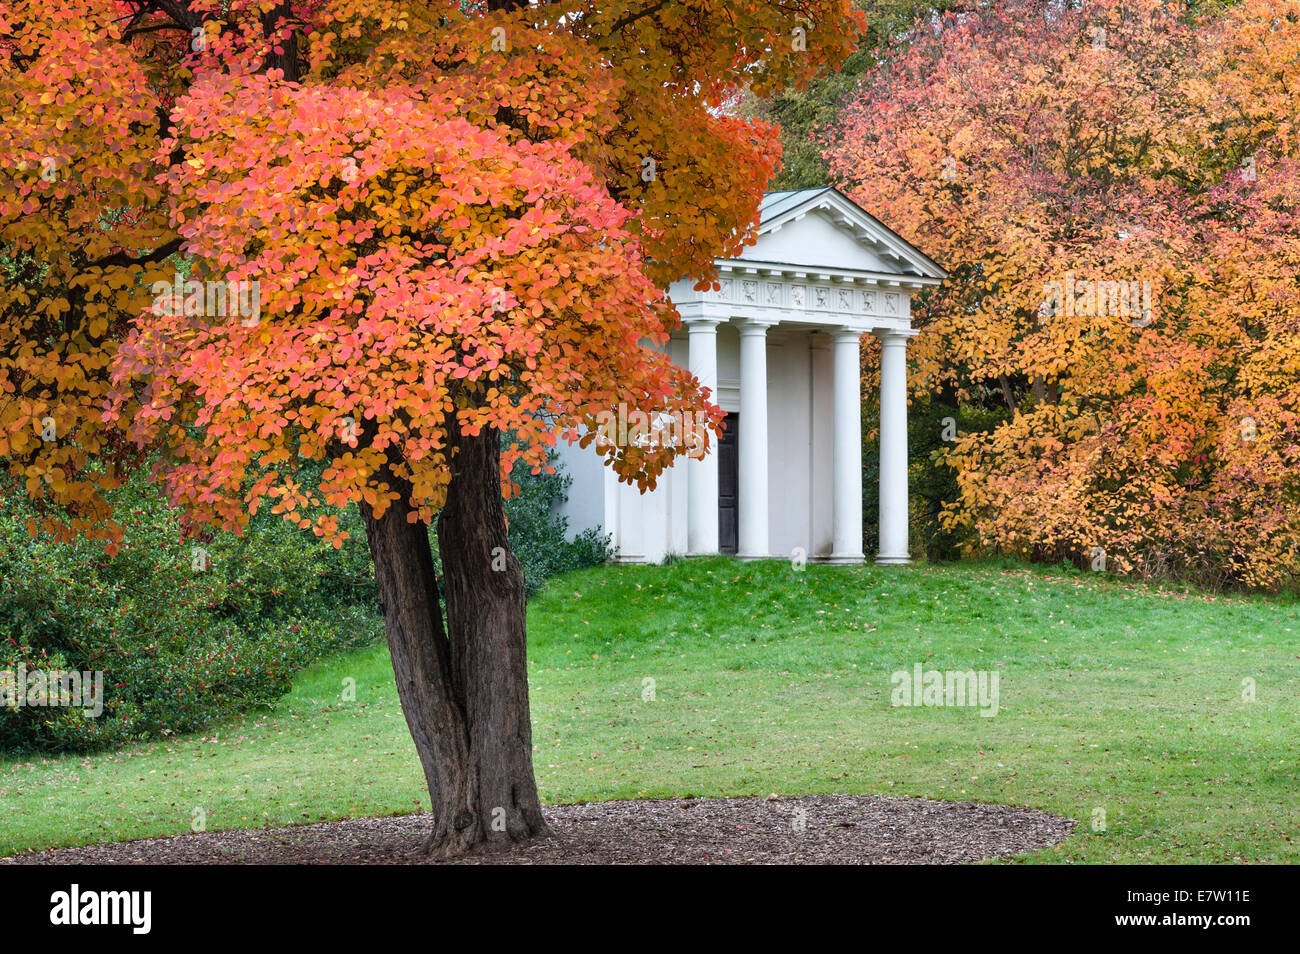 Royal Botanic Gardens, Kew, London, UK. The Temple of Bellona in autumn, with an American smokewood tree (cotinus obovatus 'Chittamwood') Stock Photo